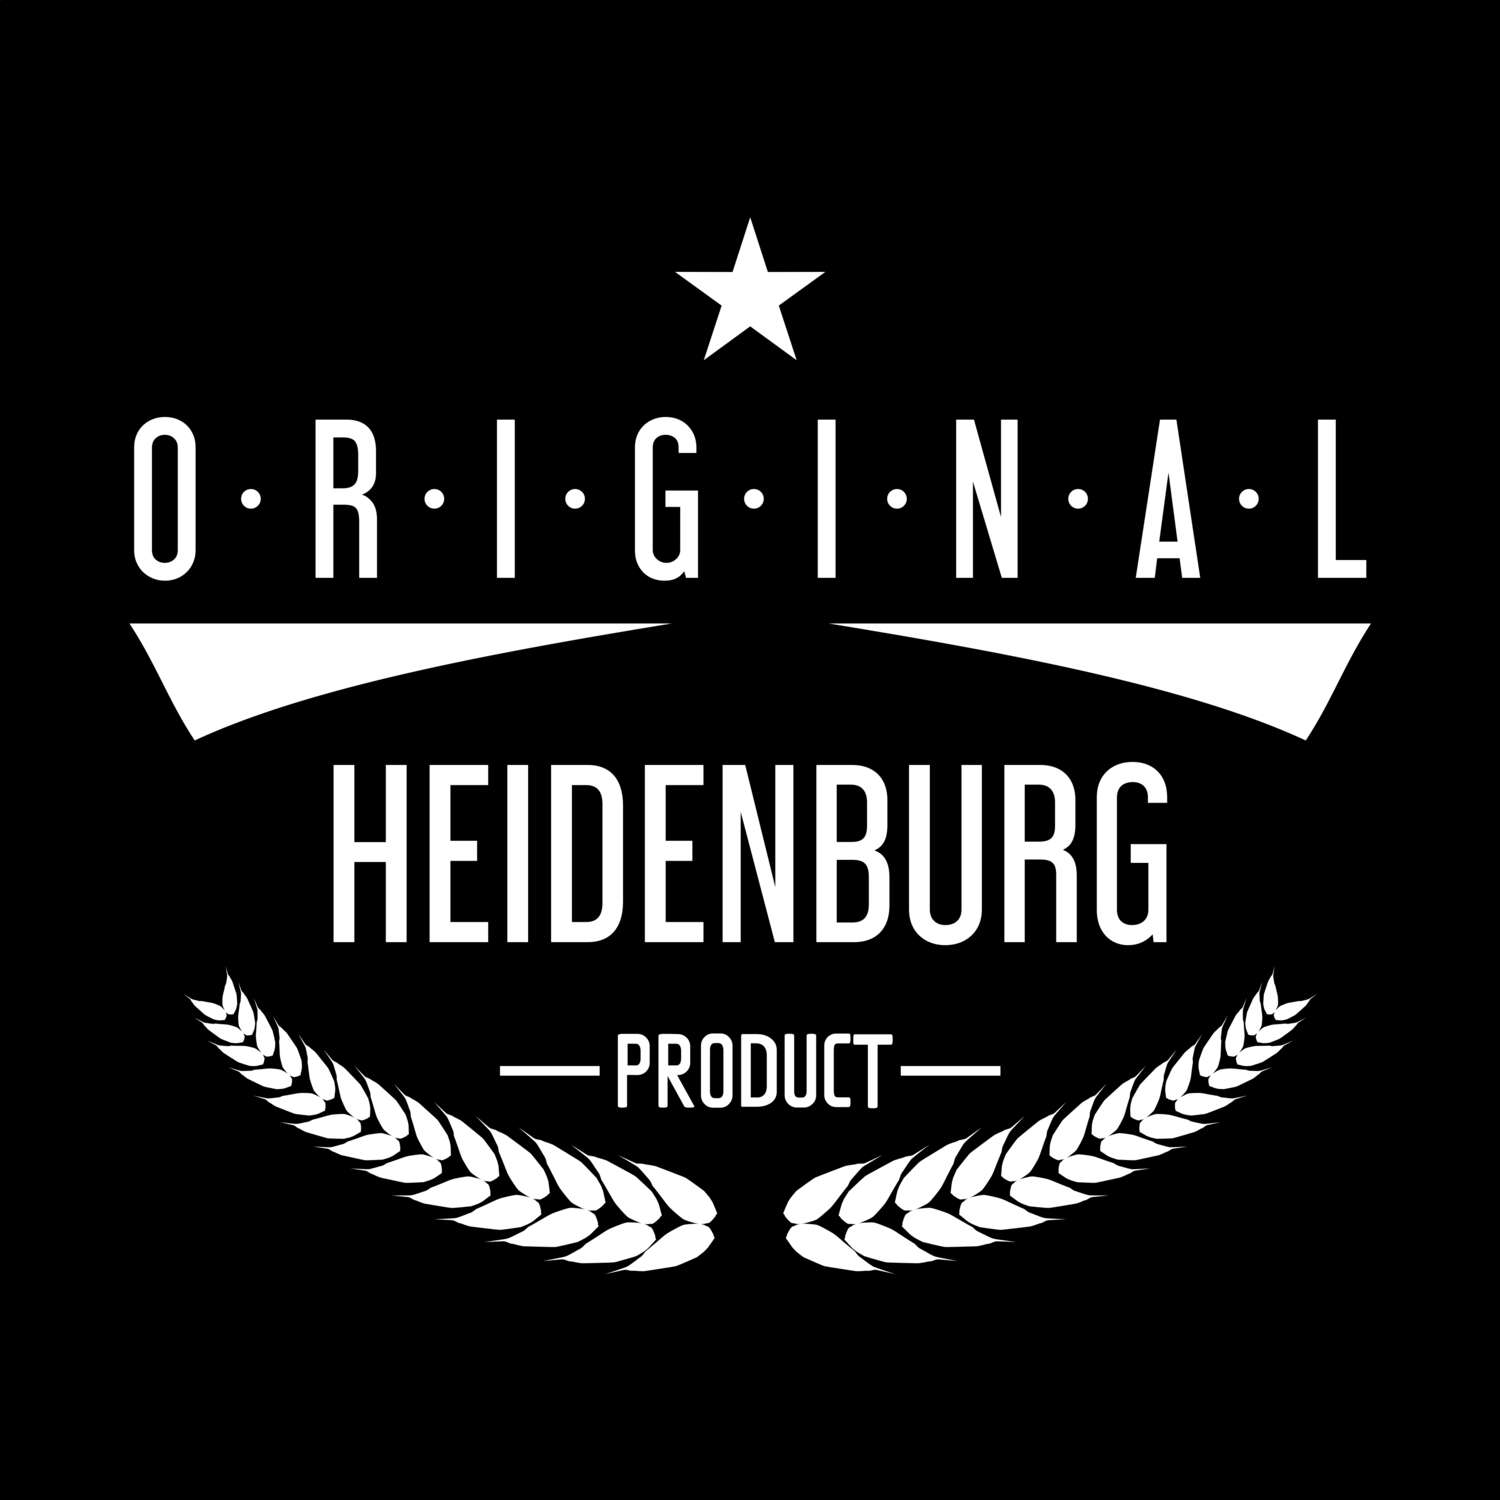 Heidenburg T-Shirt »Original Product«